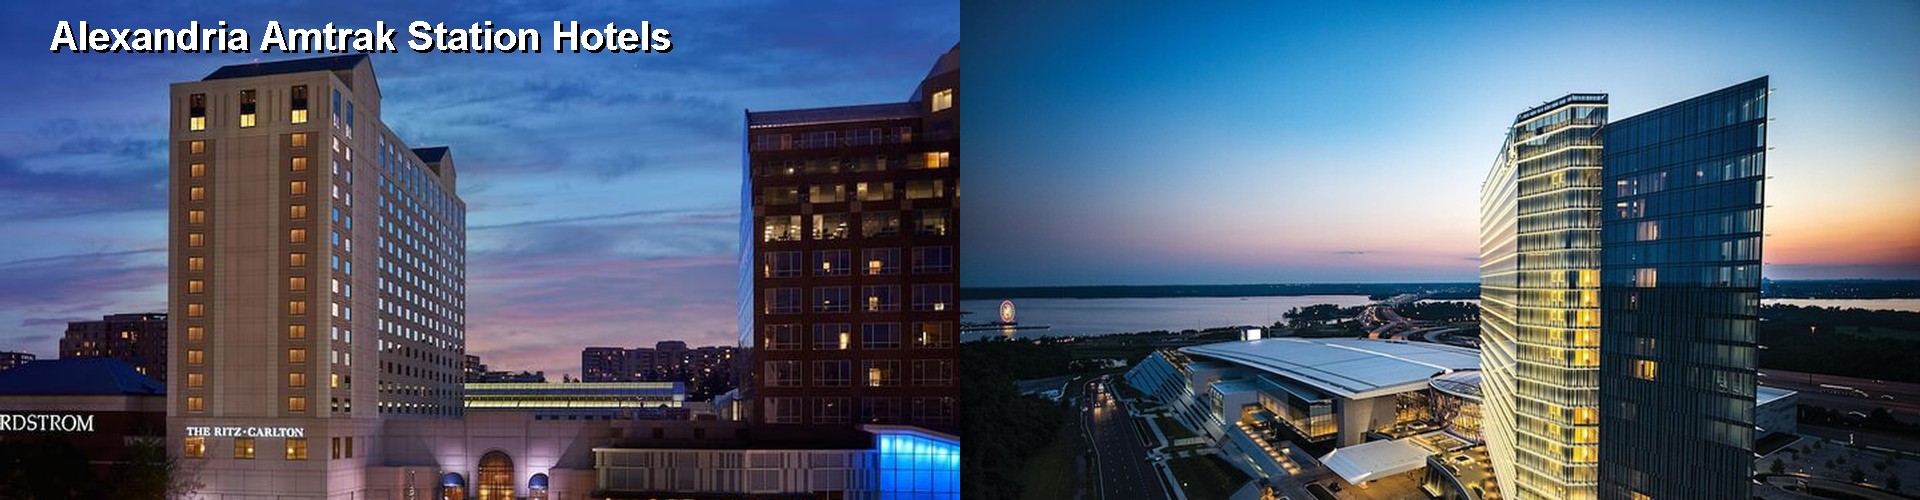 5 Best Hotels near Alexandria Amtrak Station